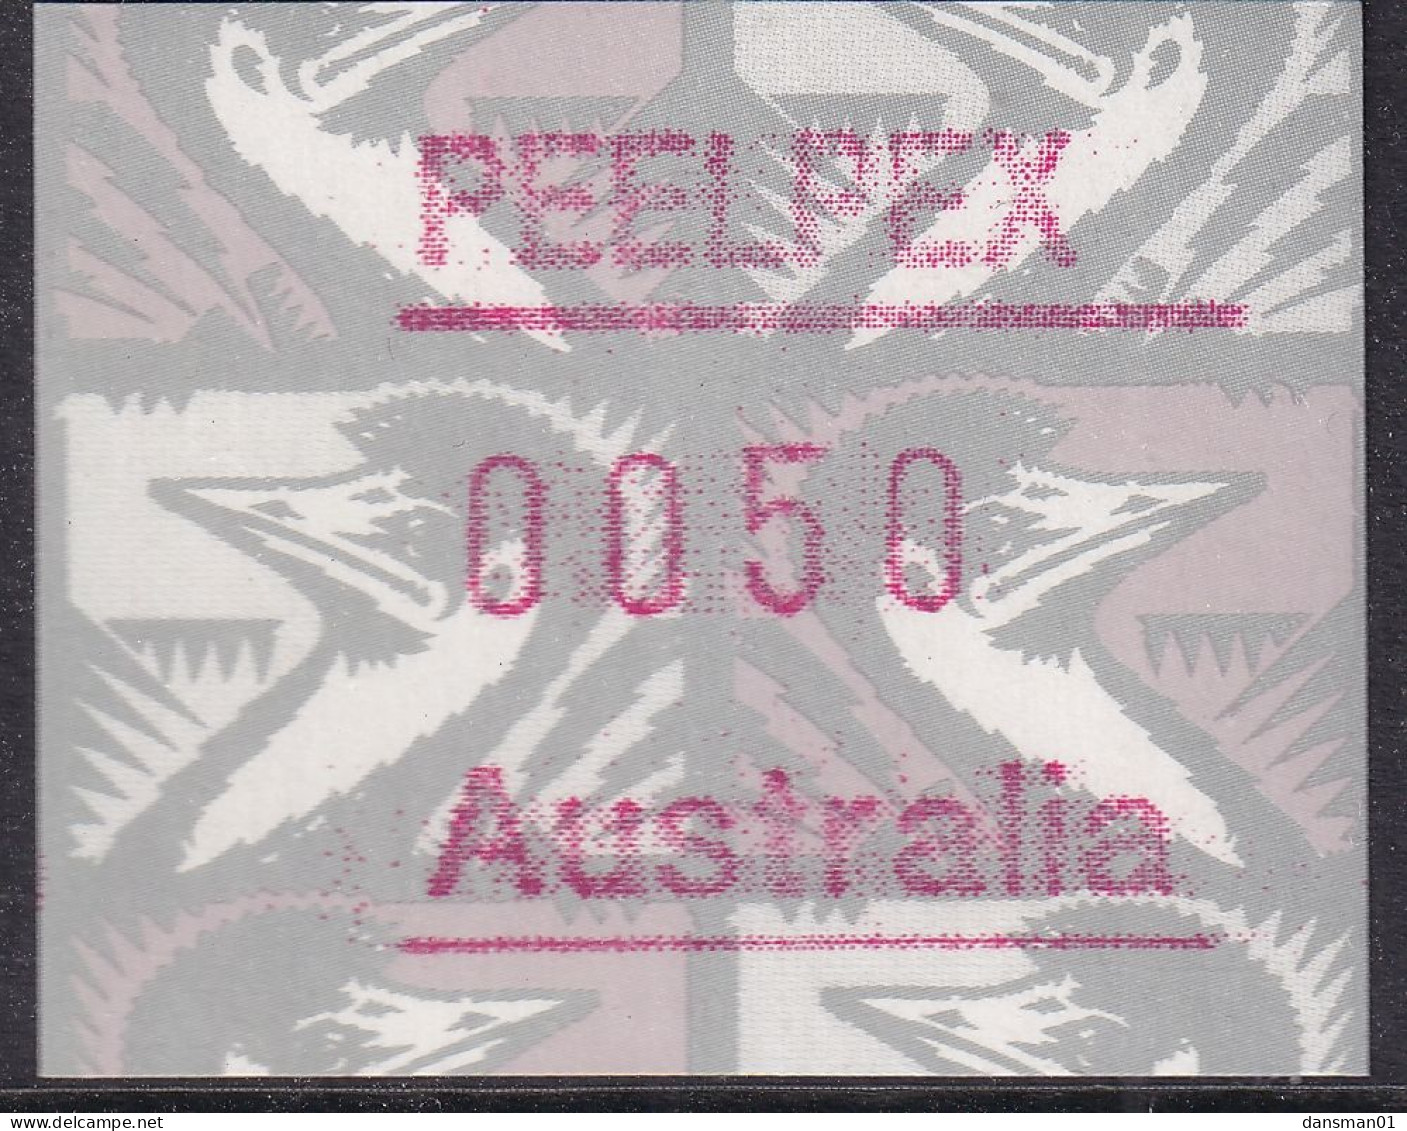 AUSTRALIA 1993 FRAMA  "PEELPEX" MNH - Timbres De Distributeurs [ATM]